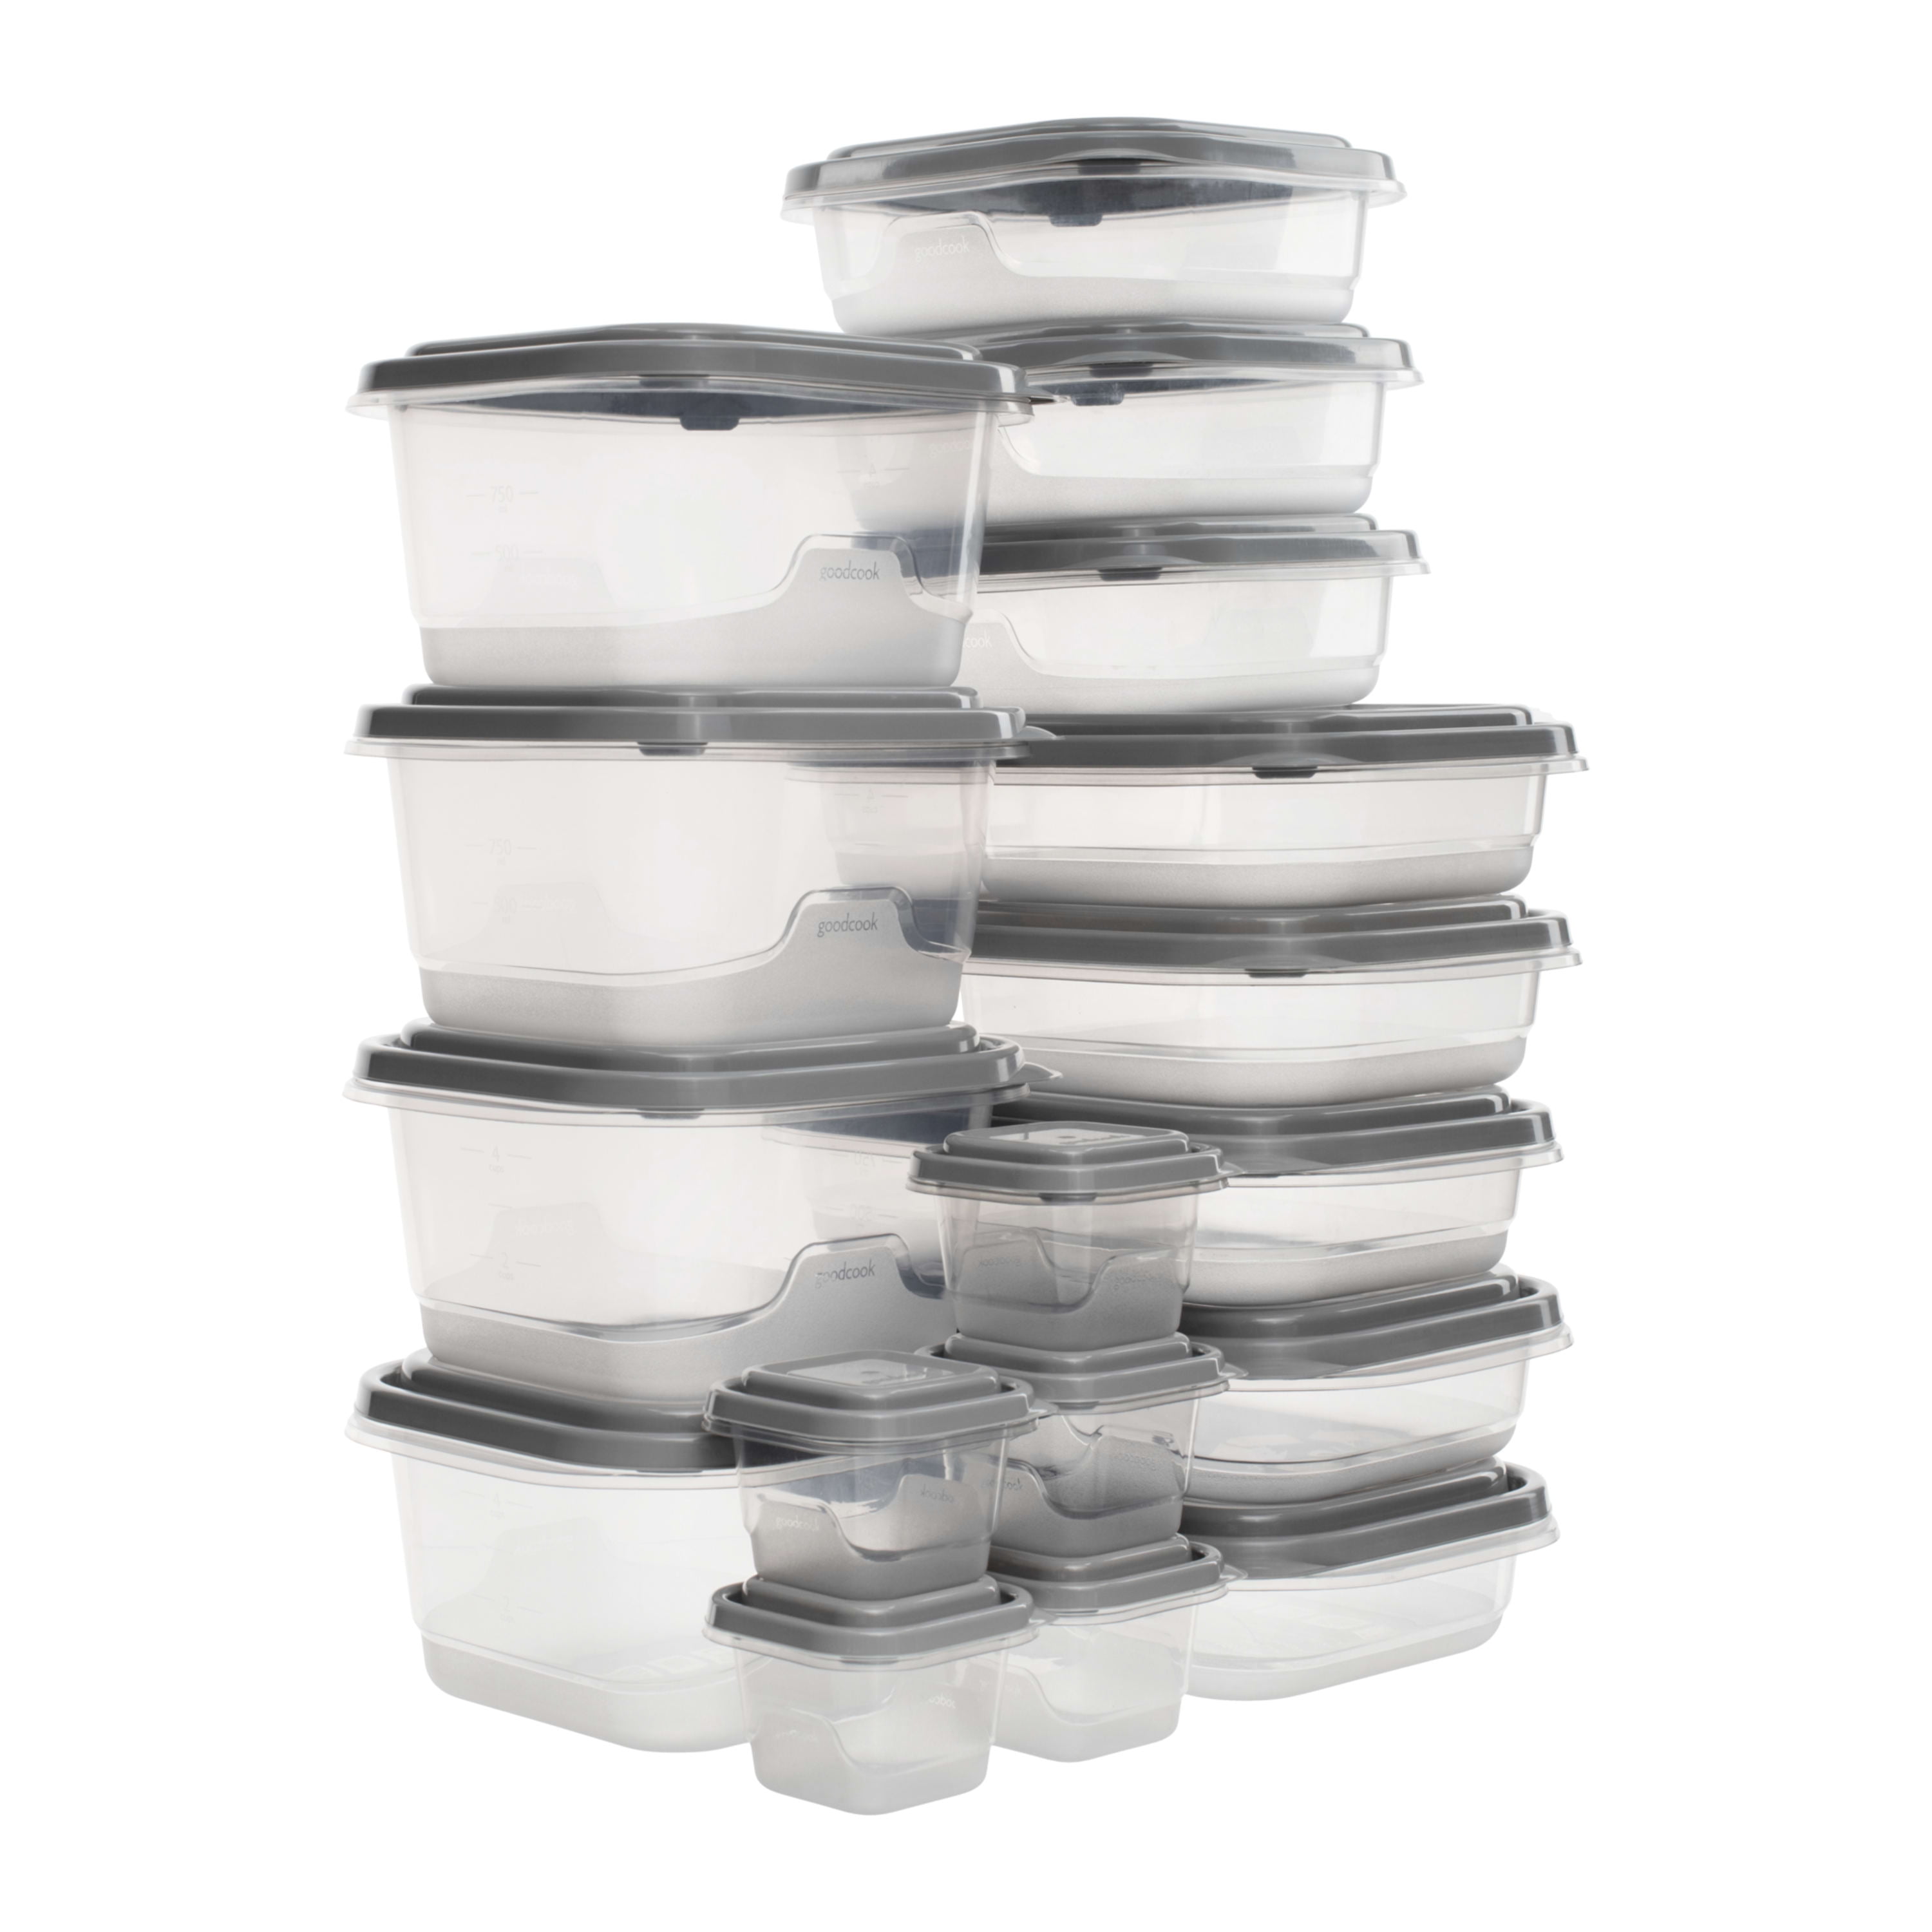 Snapware 38-piece Plastic Food Storage Set 884408032432